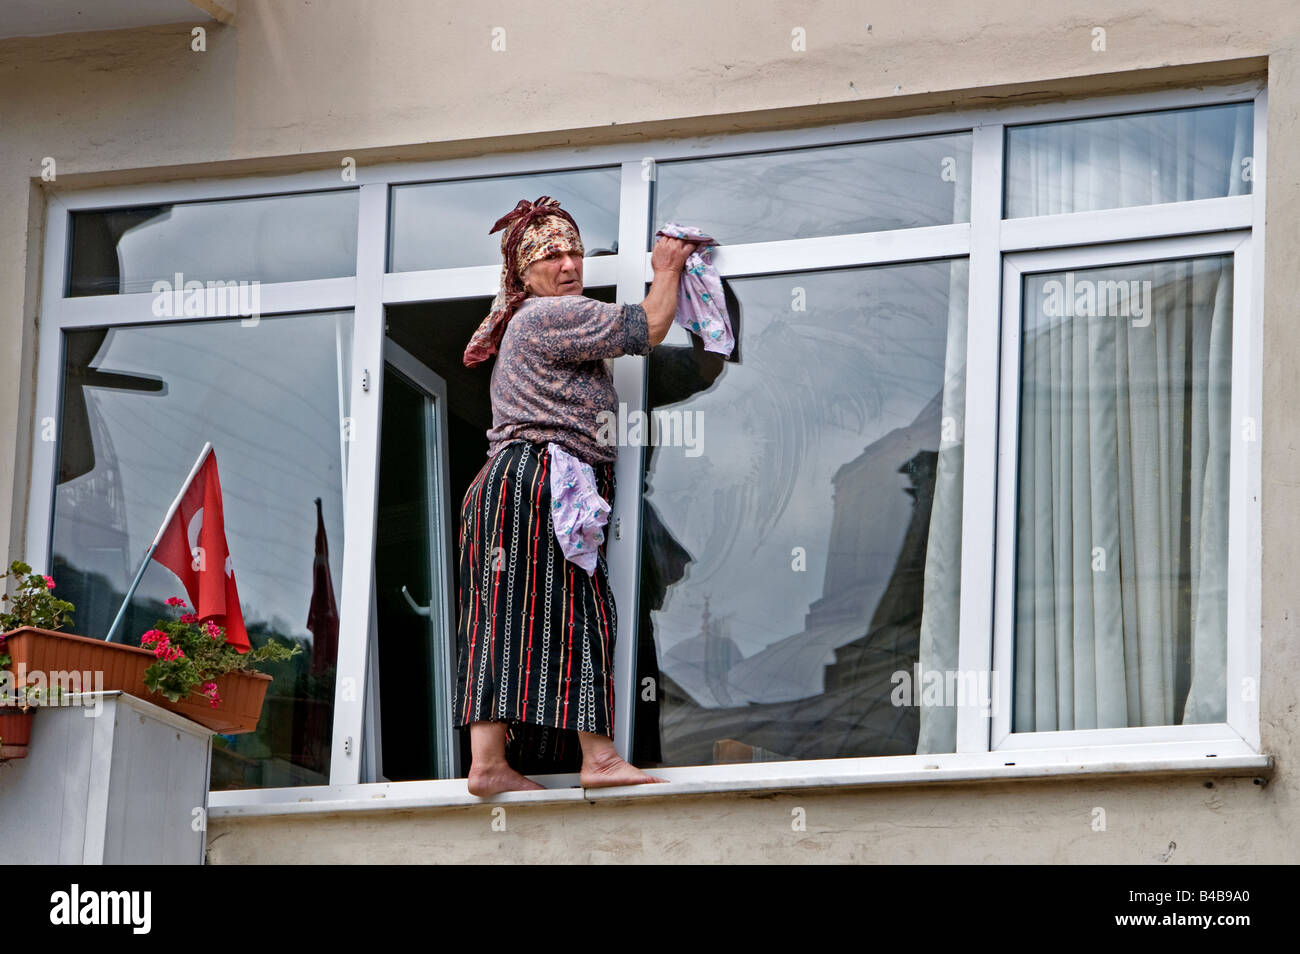 Istinye cleaning woman window windows cleaners dangerous, perilous, risky, hazardous Stock Photo